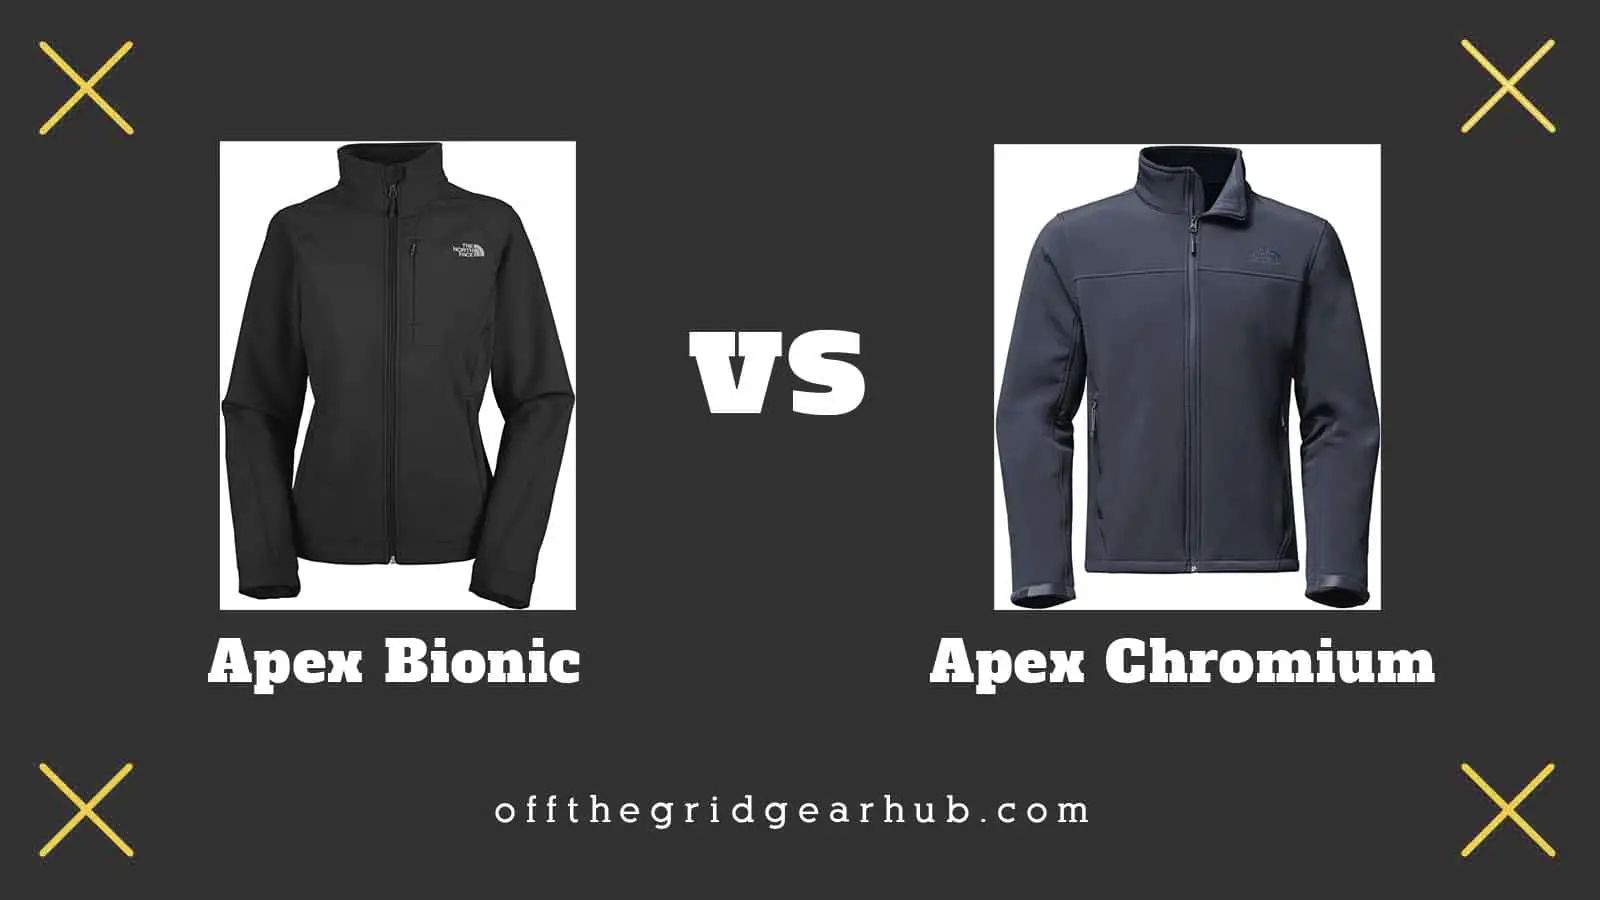 The North Face Apex Bionic vs Chromium Similar But Different